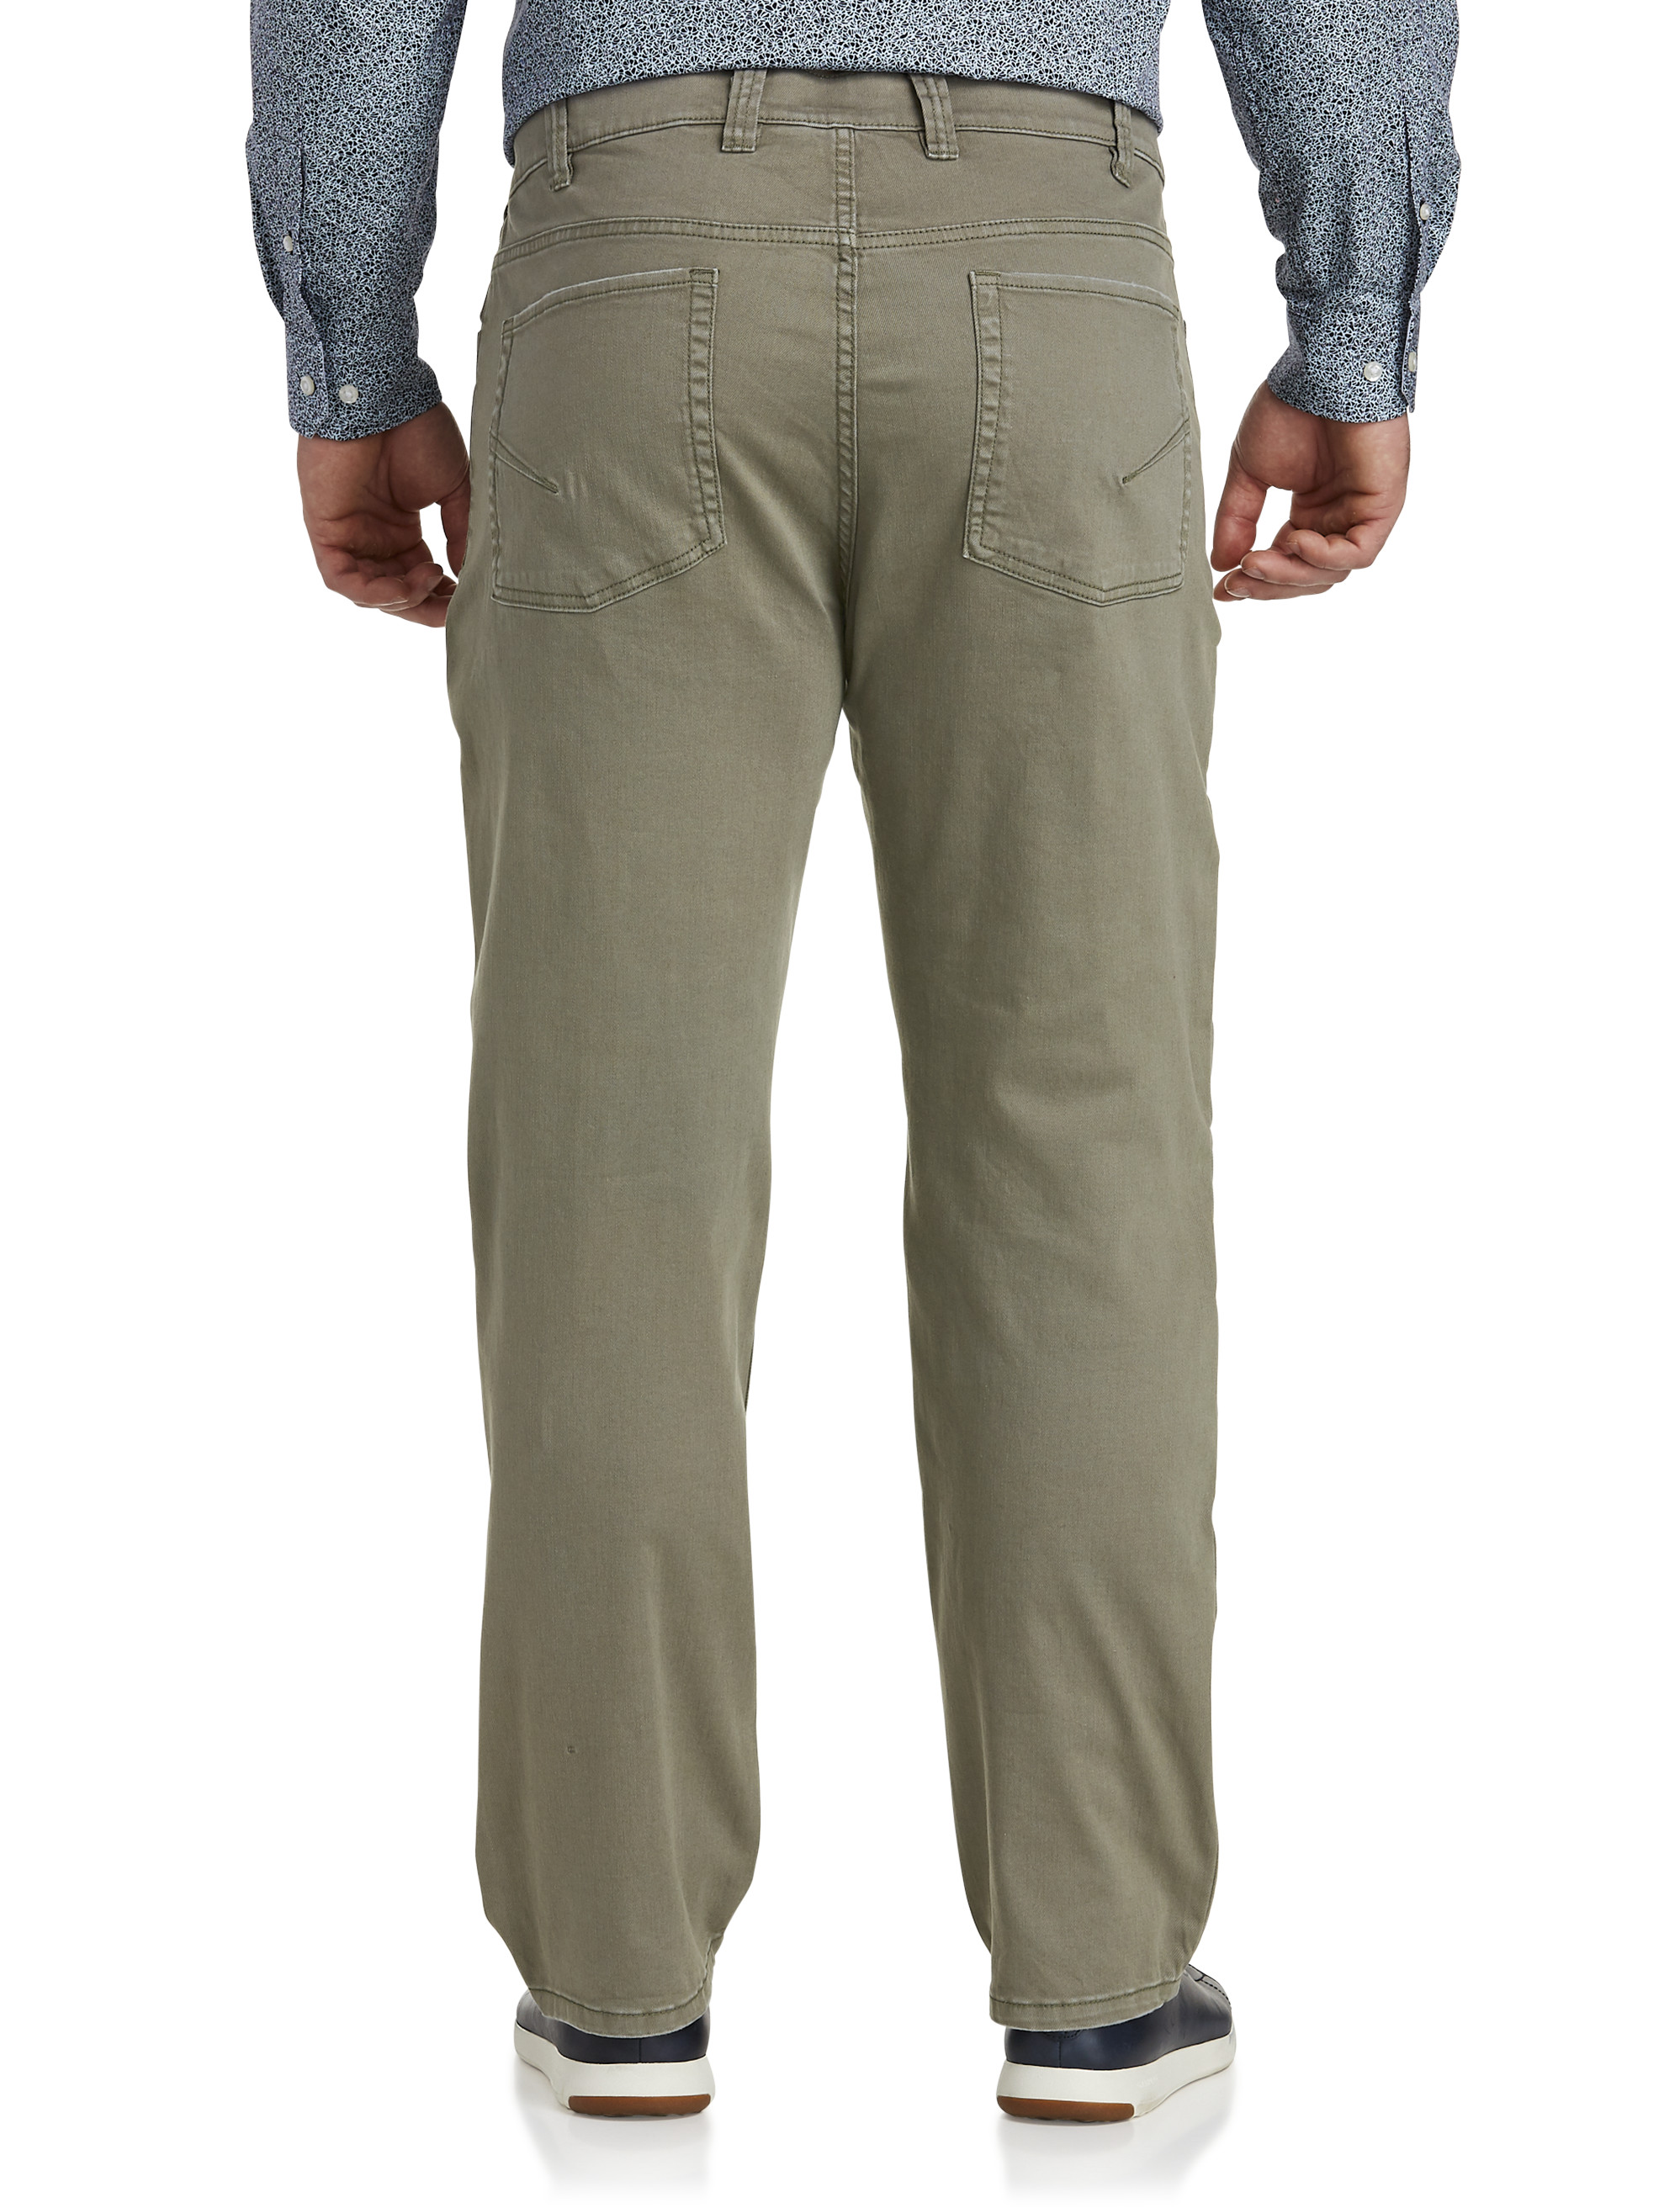 True Nation Men's Cargo Shorts Brown Size 44 Pockets Cotton Belt